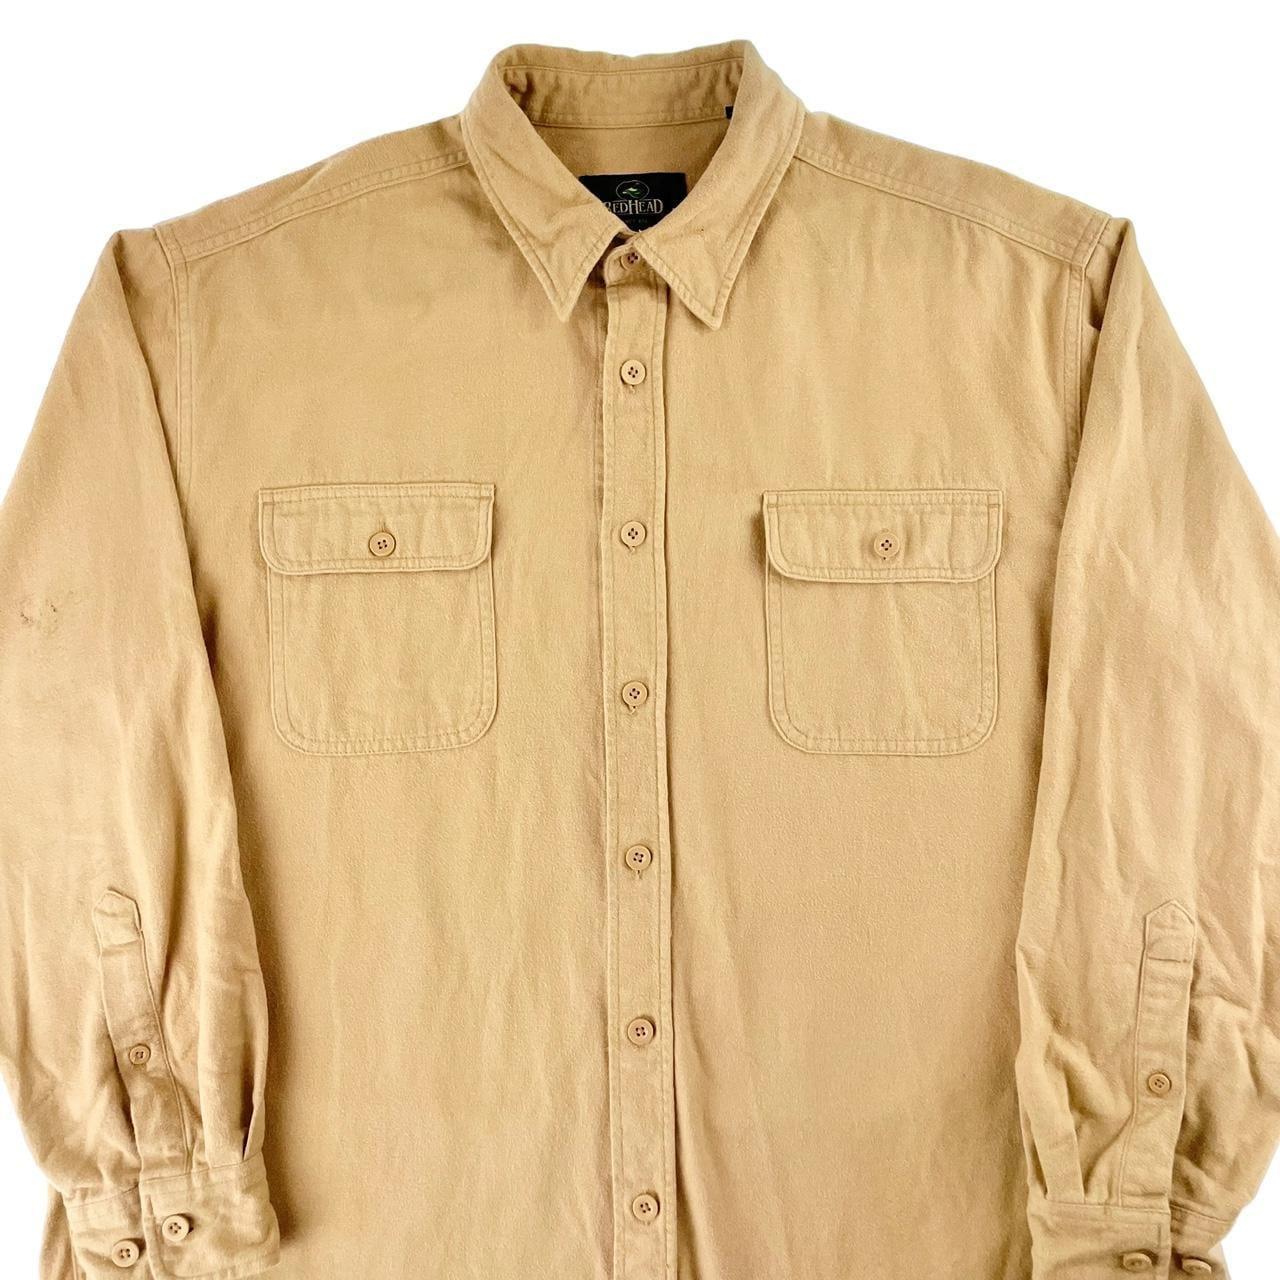 Vintage Thick button shirt size XL - Known Source